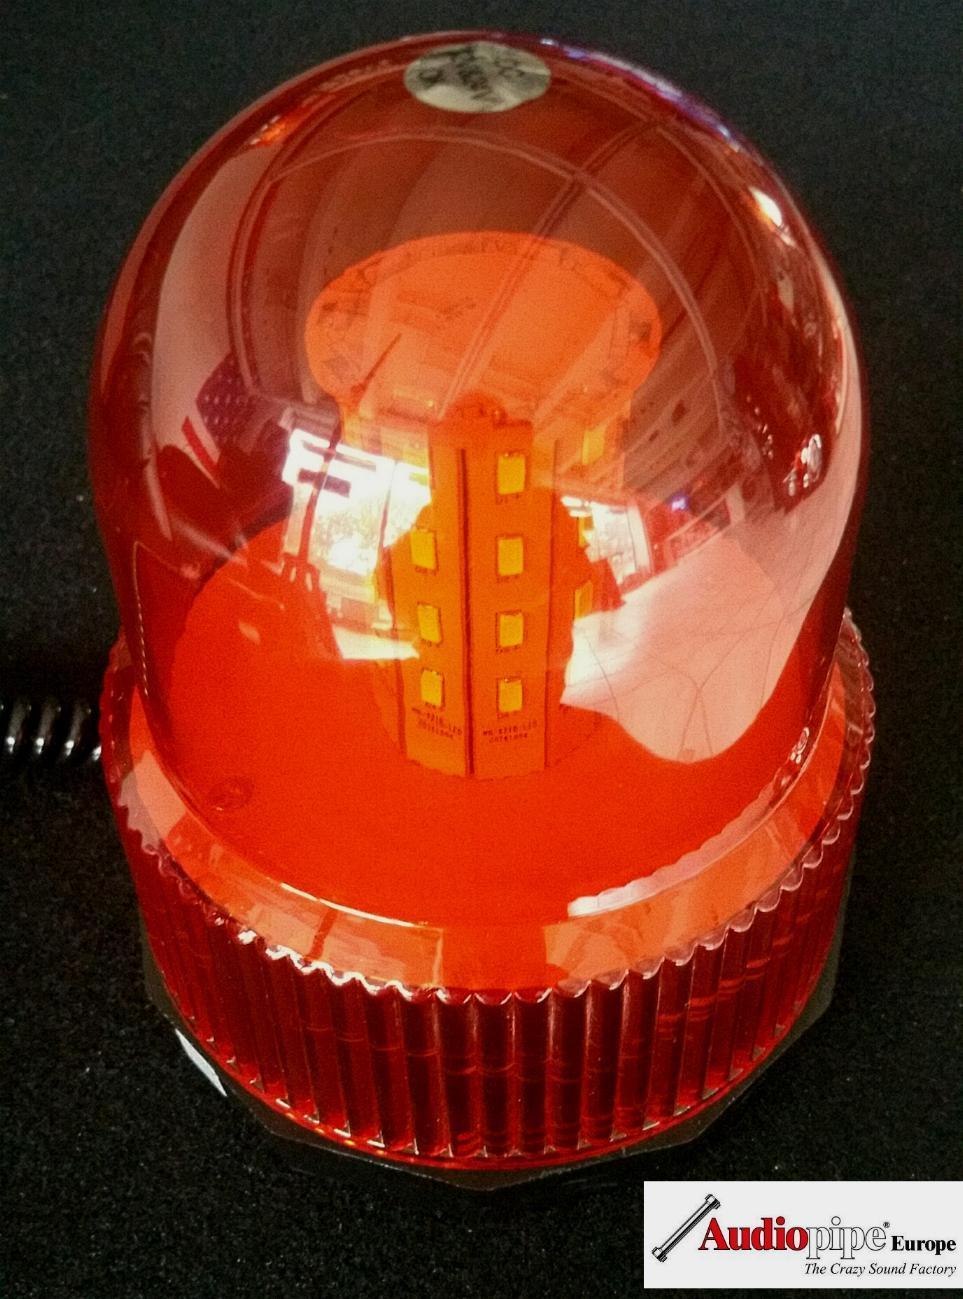 Rundumleuchte orange 12V mit Magnetfuß